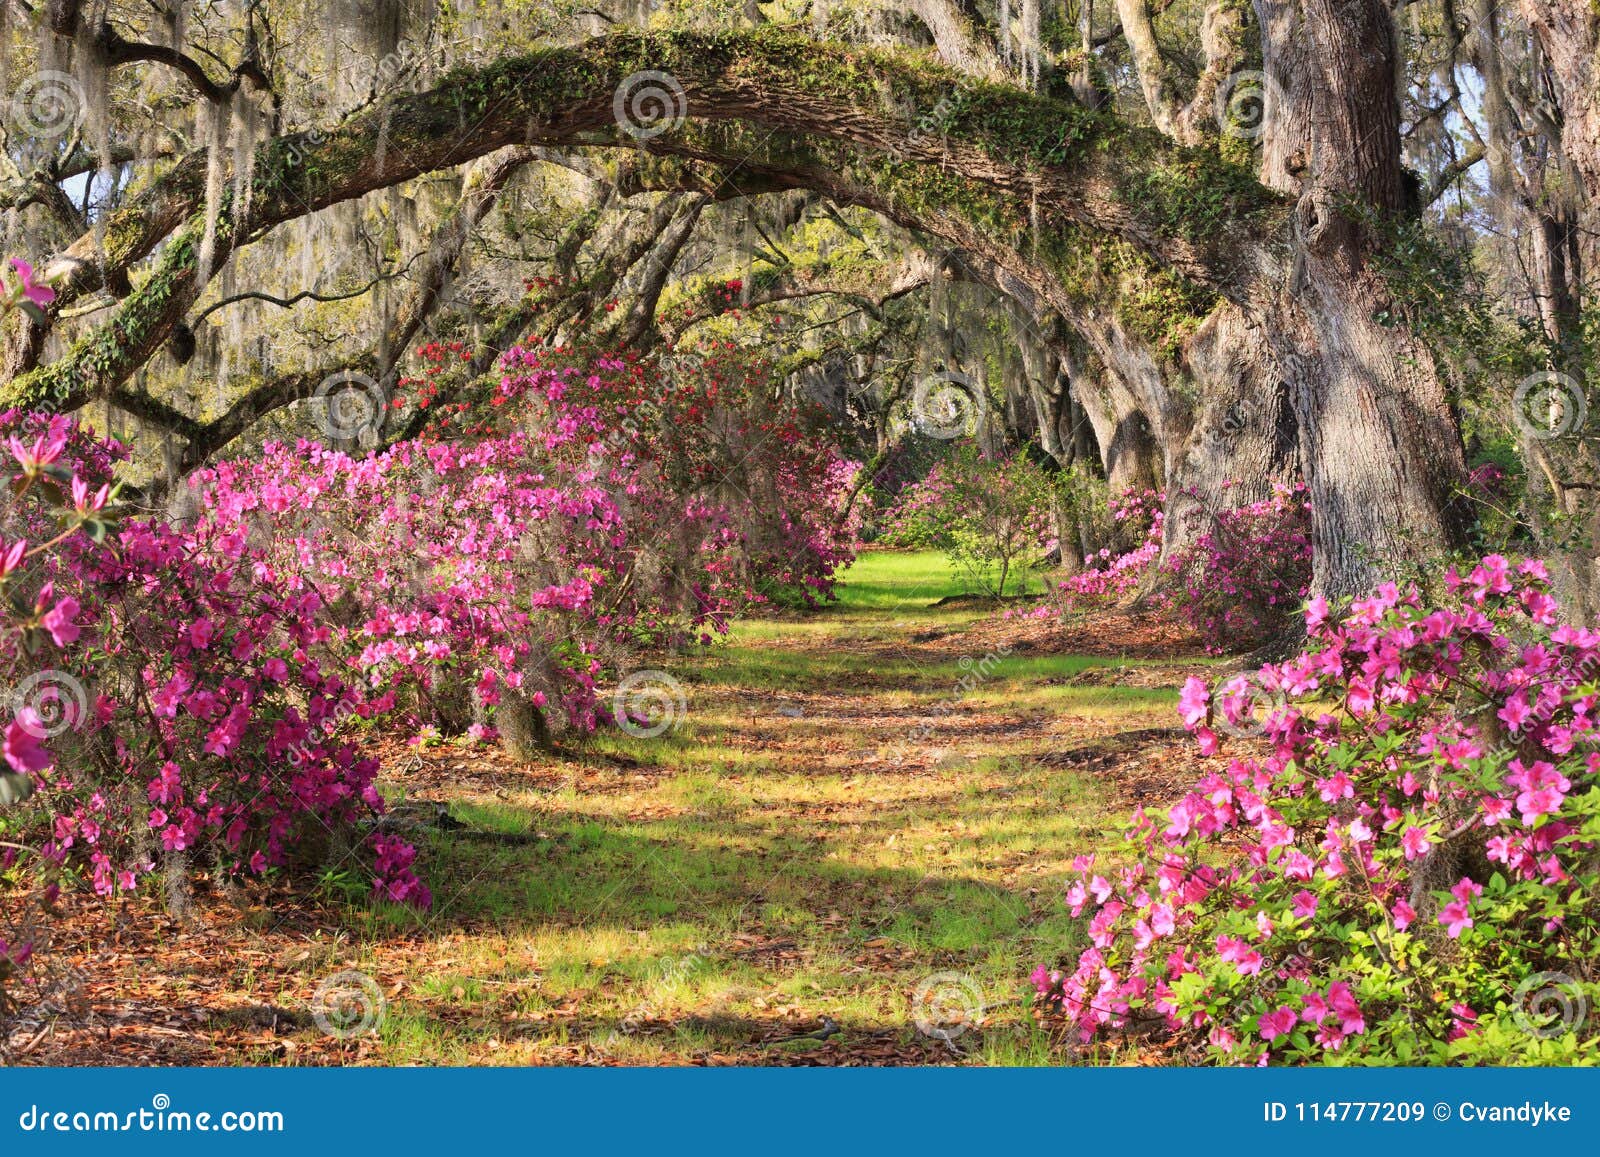 charleston sc spring background azaleas rows pink azalea bushes beneath arched limbs live oak trees draped spanish 114777209